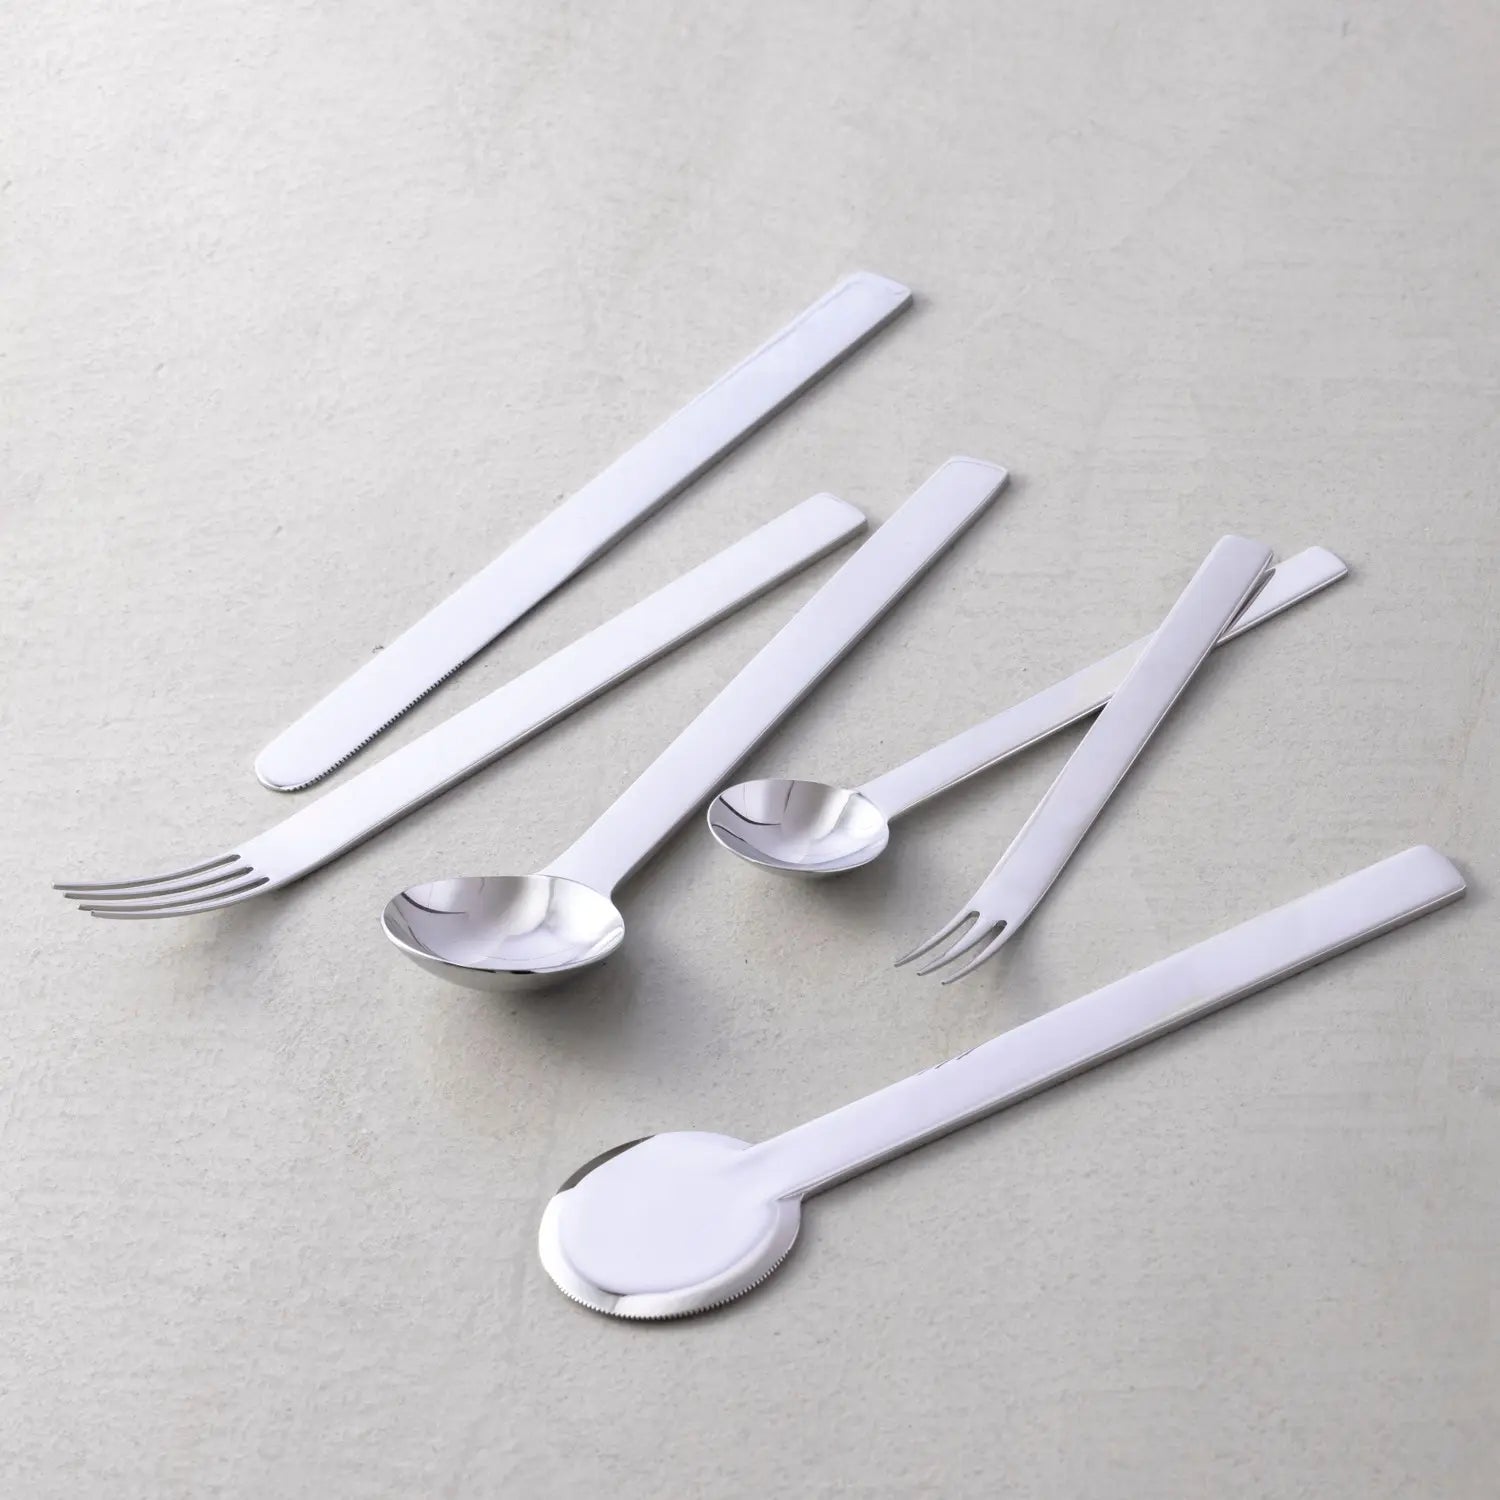 Tsubame Shinko TI-1 Stainless Steel Round-Headed Dinner Knife 19.5cm Loose Cutlery